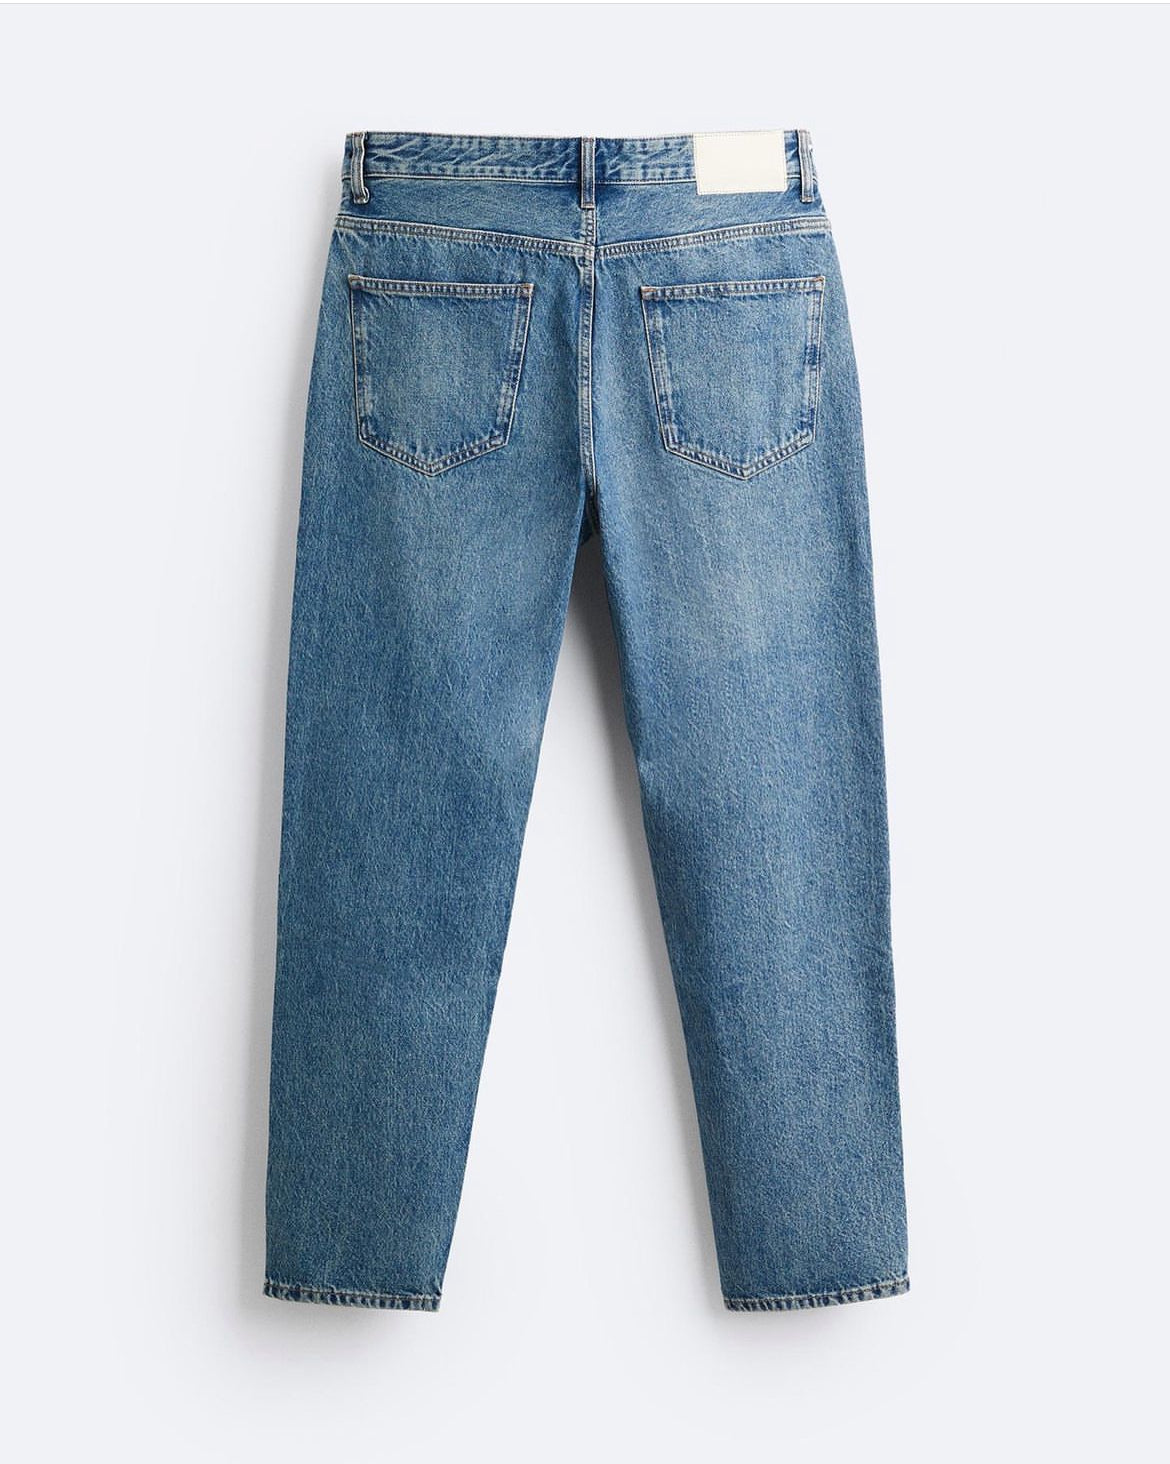 Zara slim fit jeans in blue